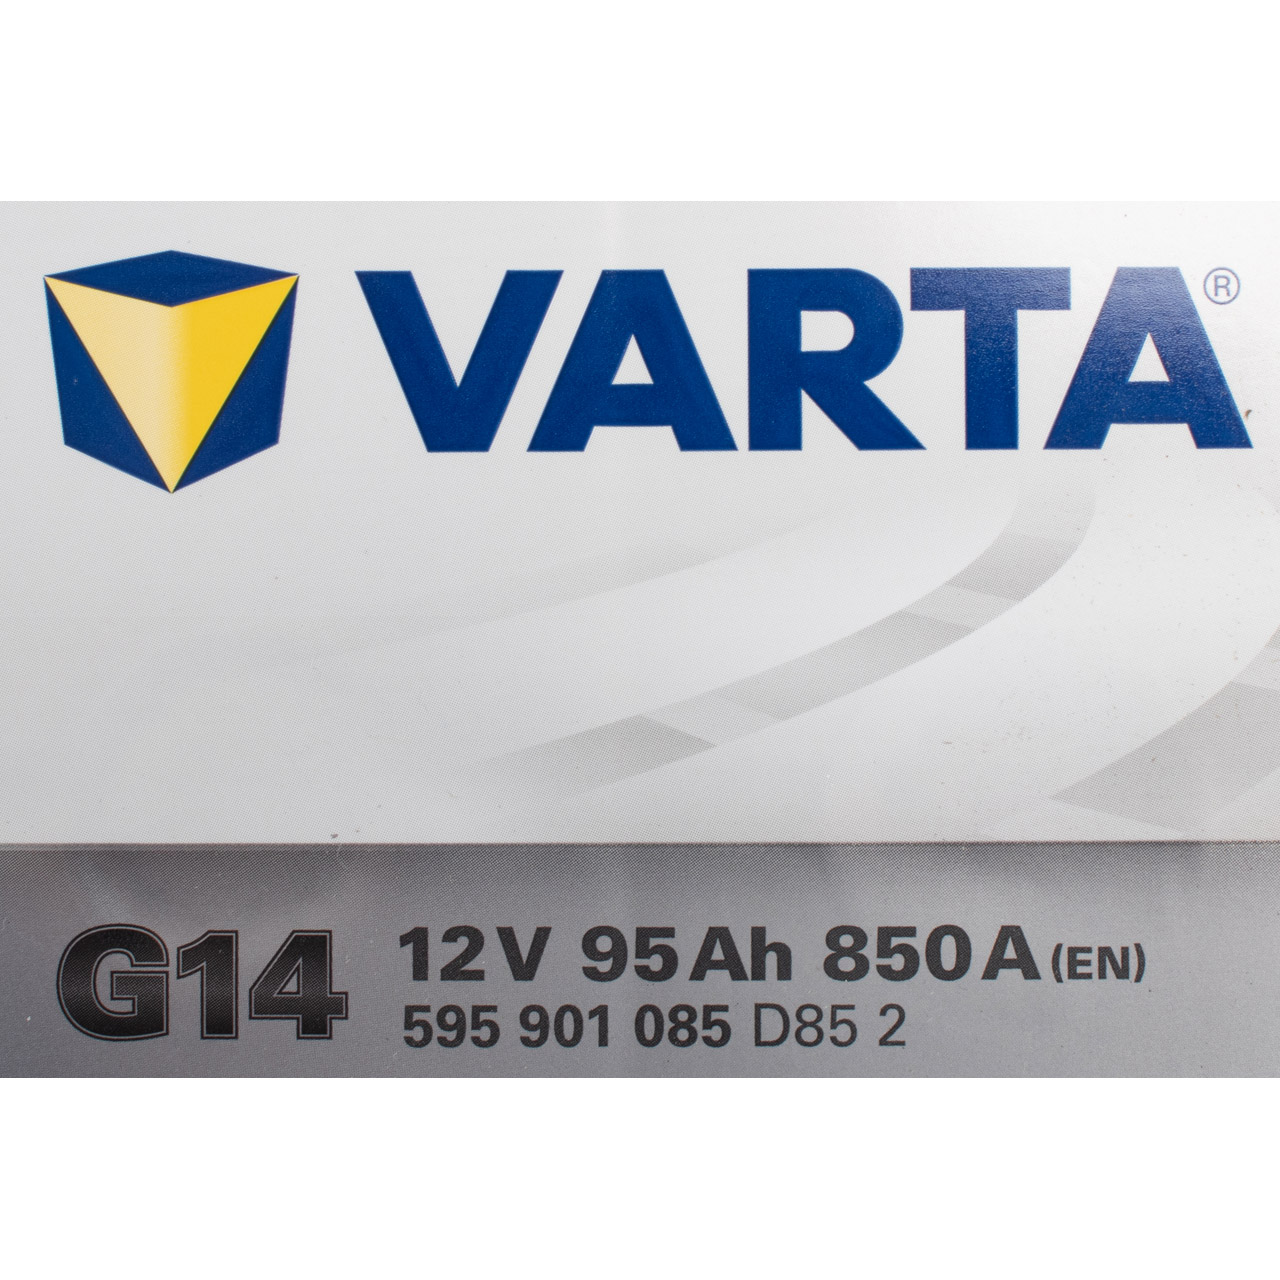 VARTA G14 SILVER dynamic AGM Autobatterie Starterbatterie 12V 95Ah EN850A